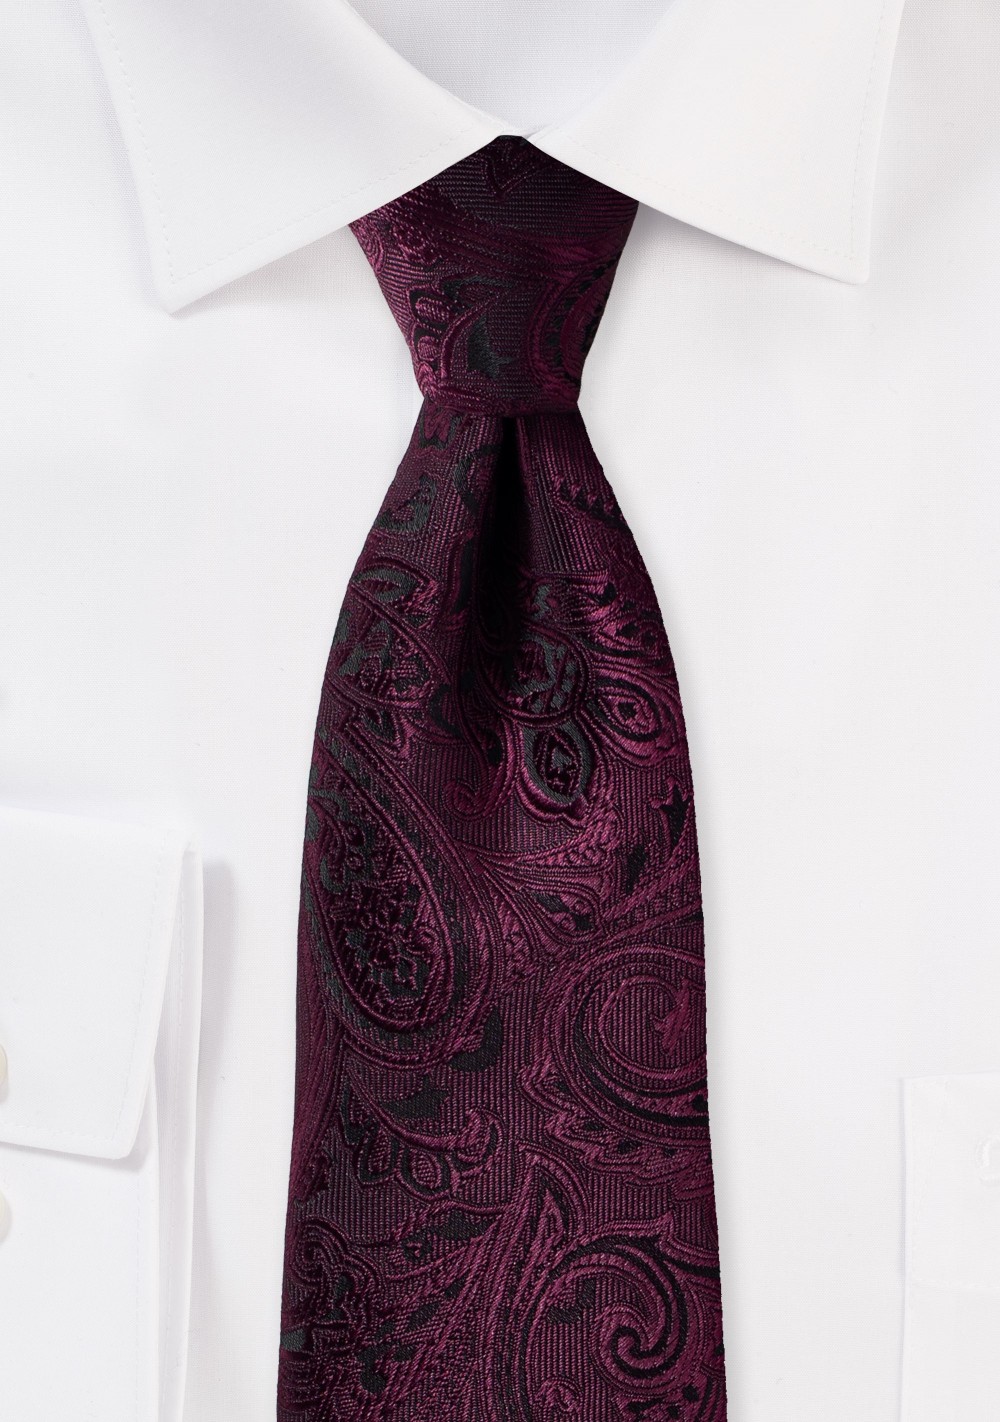 Claret Paisley Tie in XL